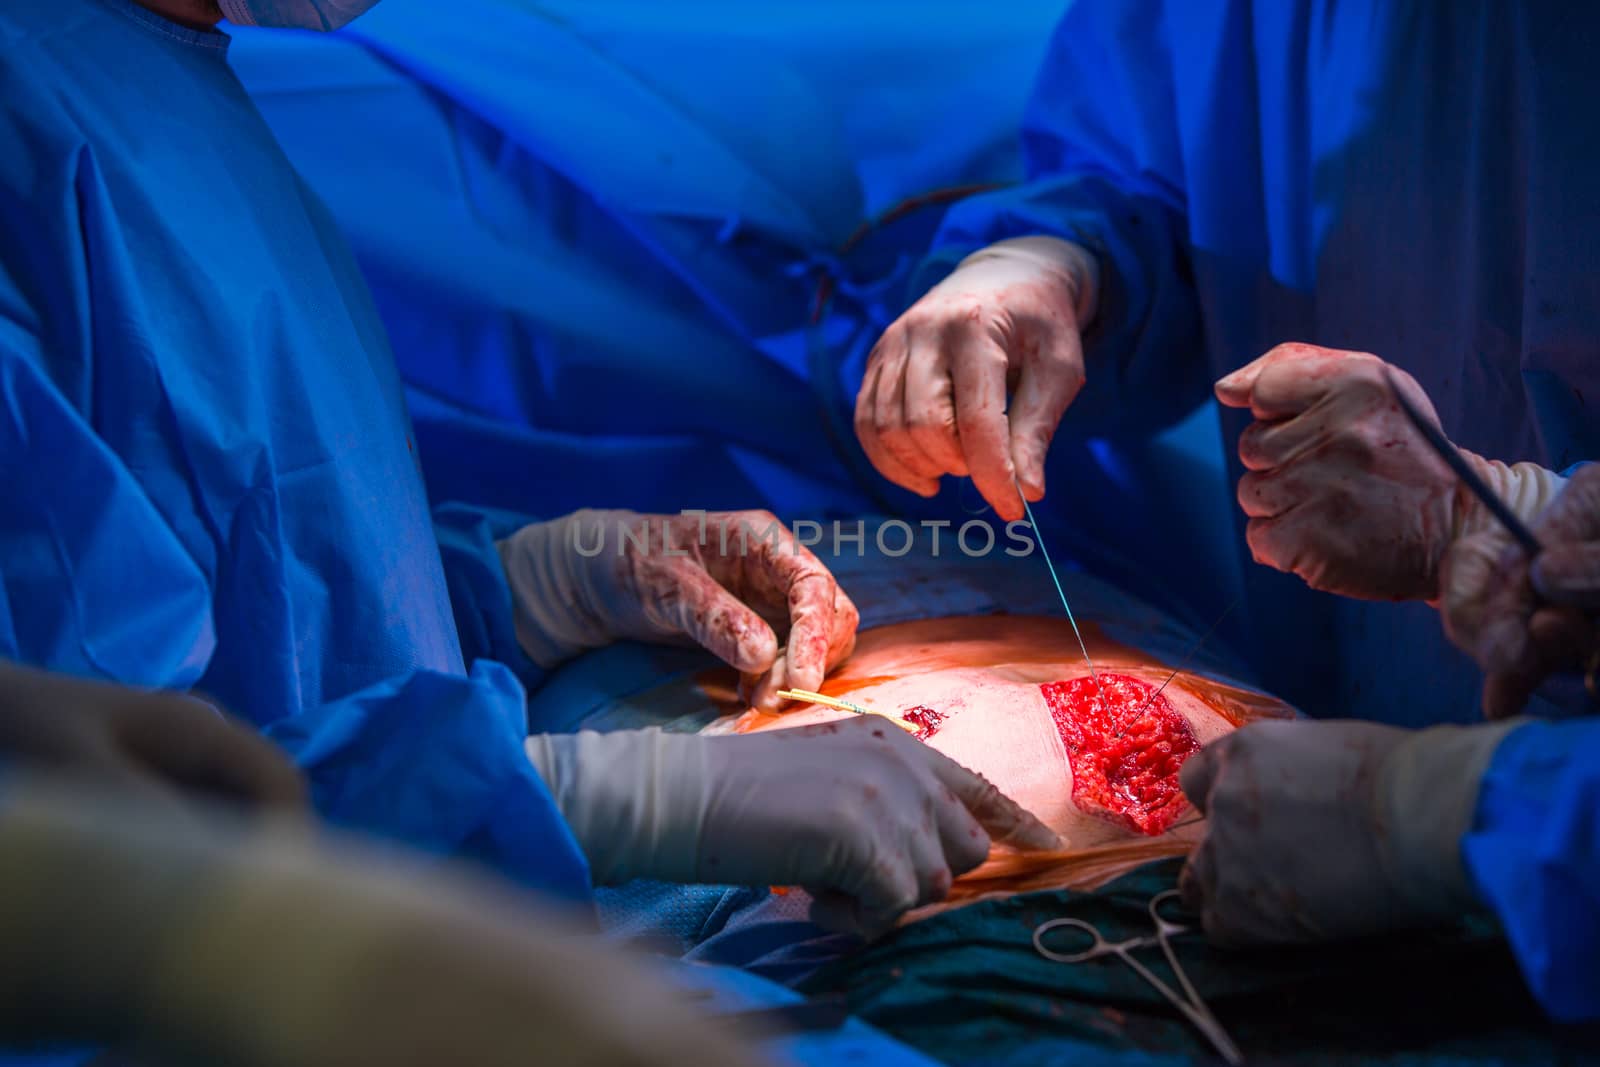 Surgery in a modern hospital by viktor_cap